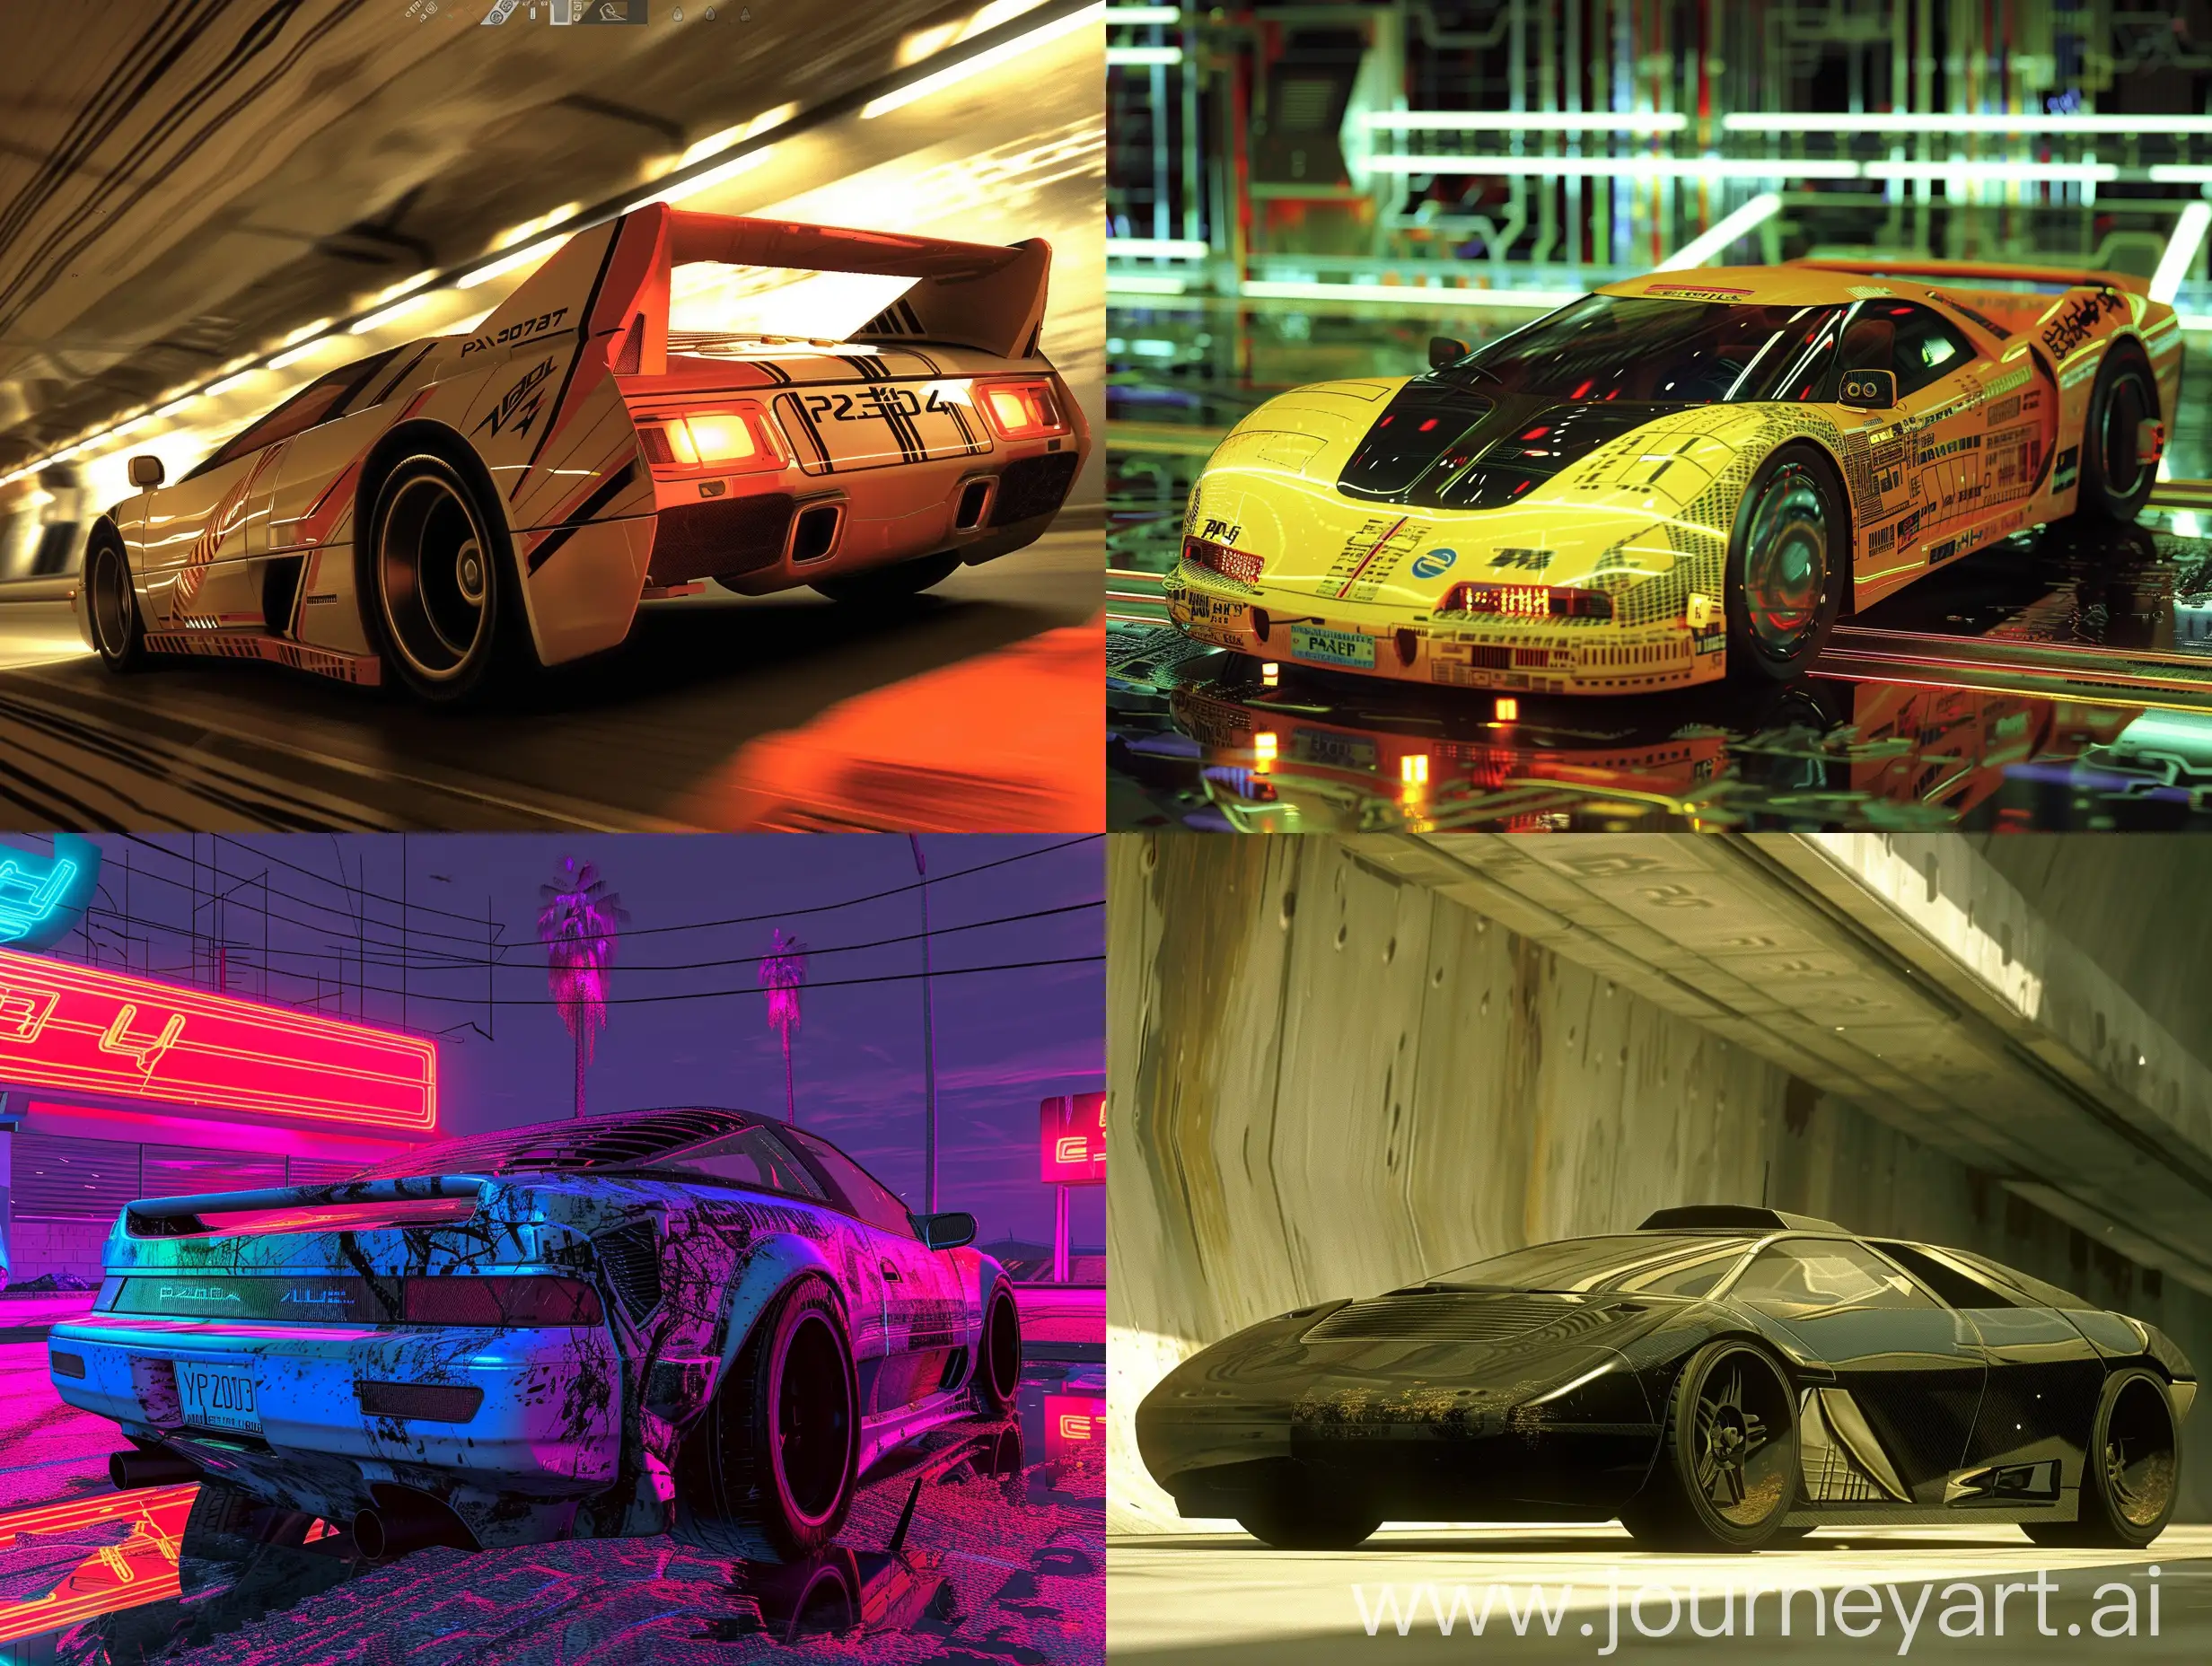 ps2 graphics screengrab of a car , genre, retro, modern, futurism, y2k aesthetic, nostalgic trend